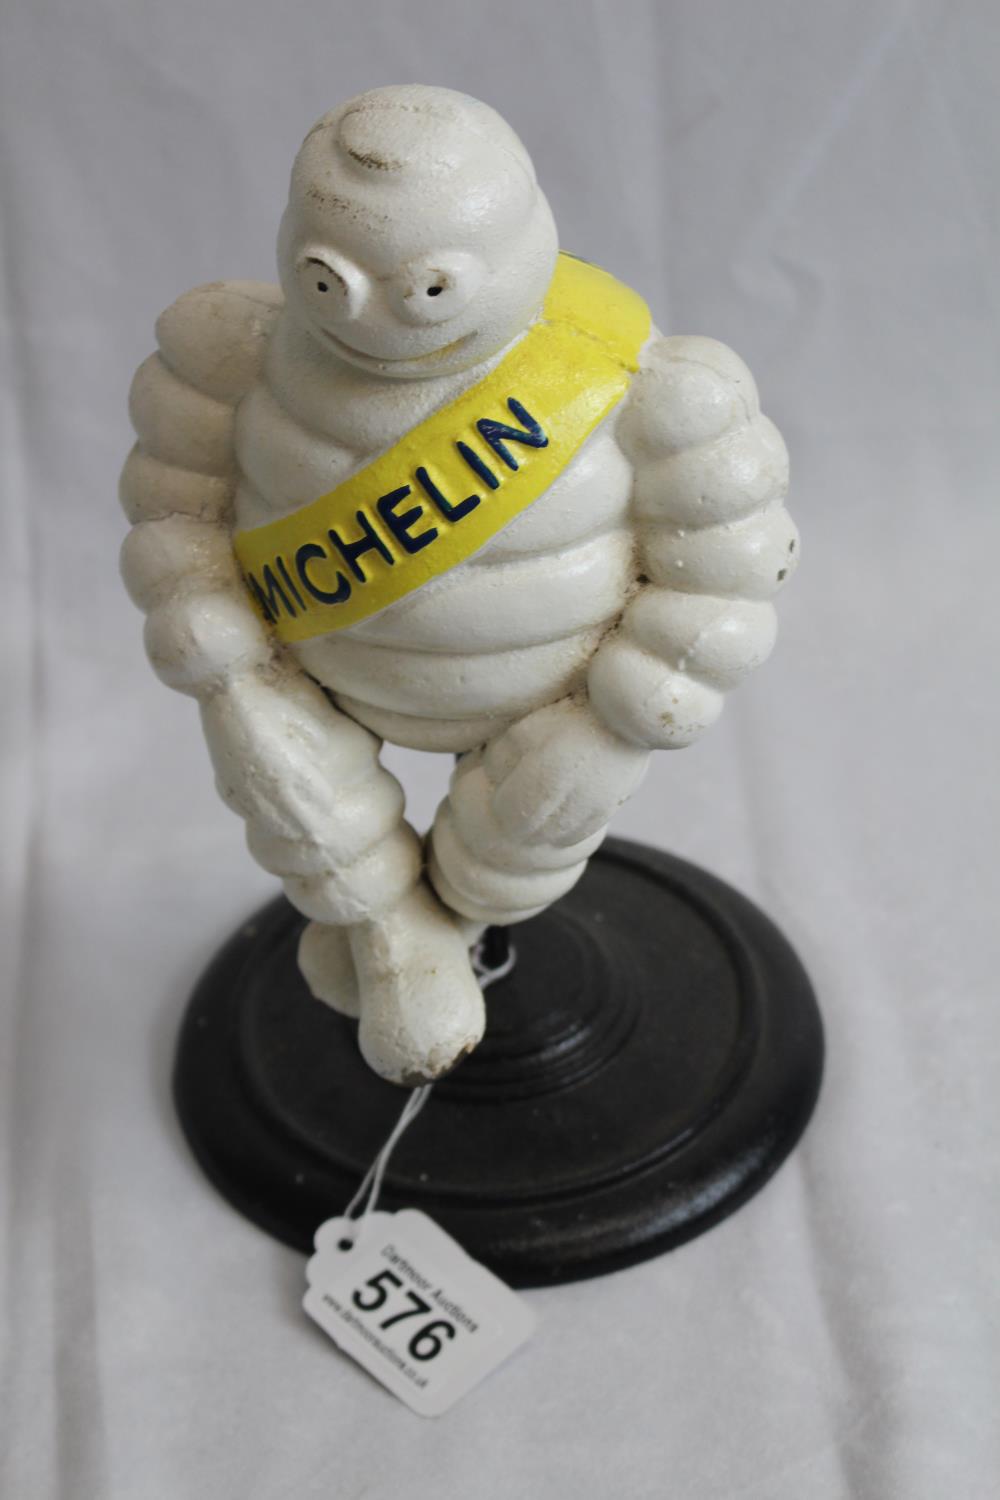 Cast iron revolving Michelin man